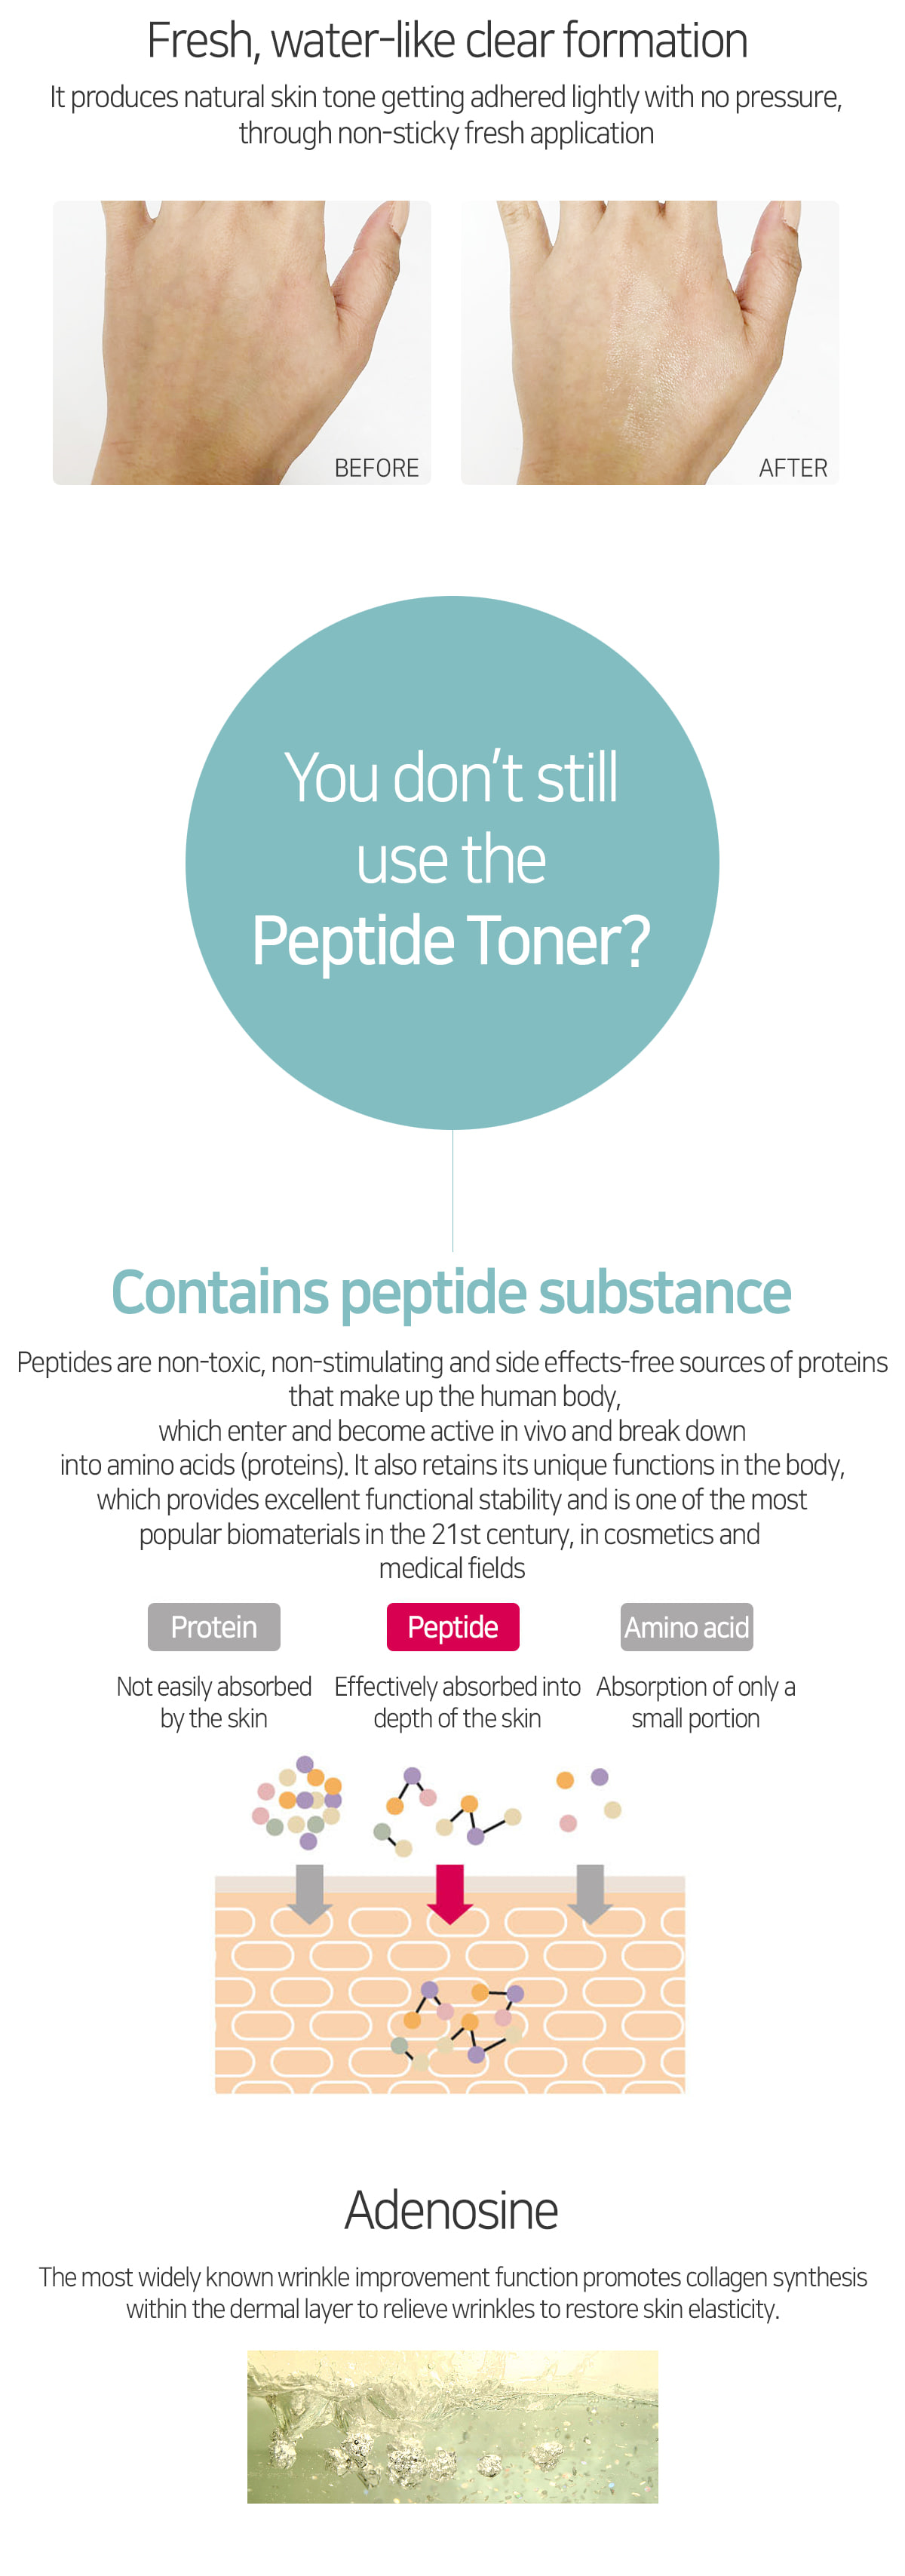 Peptide Toner 300ml · Highly moisturizing and uninspired moisturizing power
. Increase moisture care and elasticity with peptide
content
· Balance balance balance due to botanical patent
composition